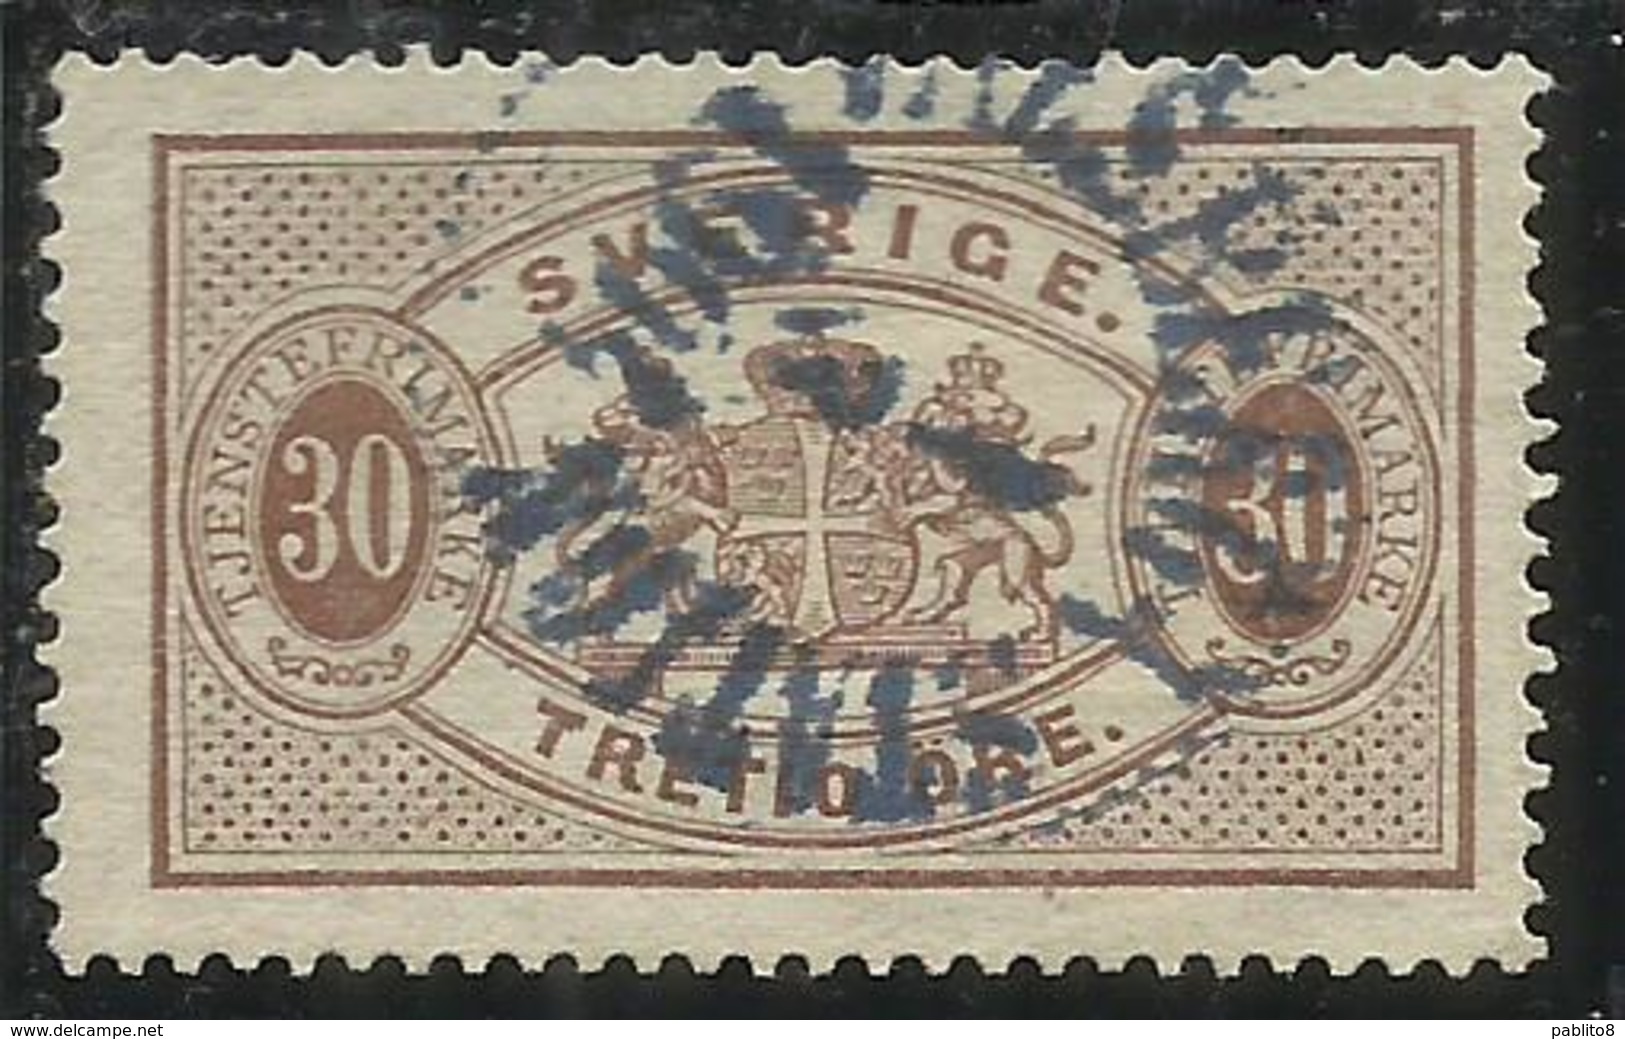 SWEDEN SVERIGE SVEZIA SUEDE 1874 1877 OFFICIAL STAMPS ORE 30o USATO USED OBLITERE' - Fiscali